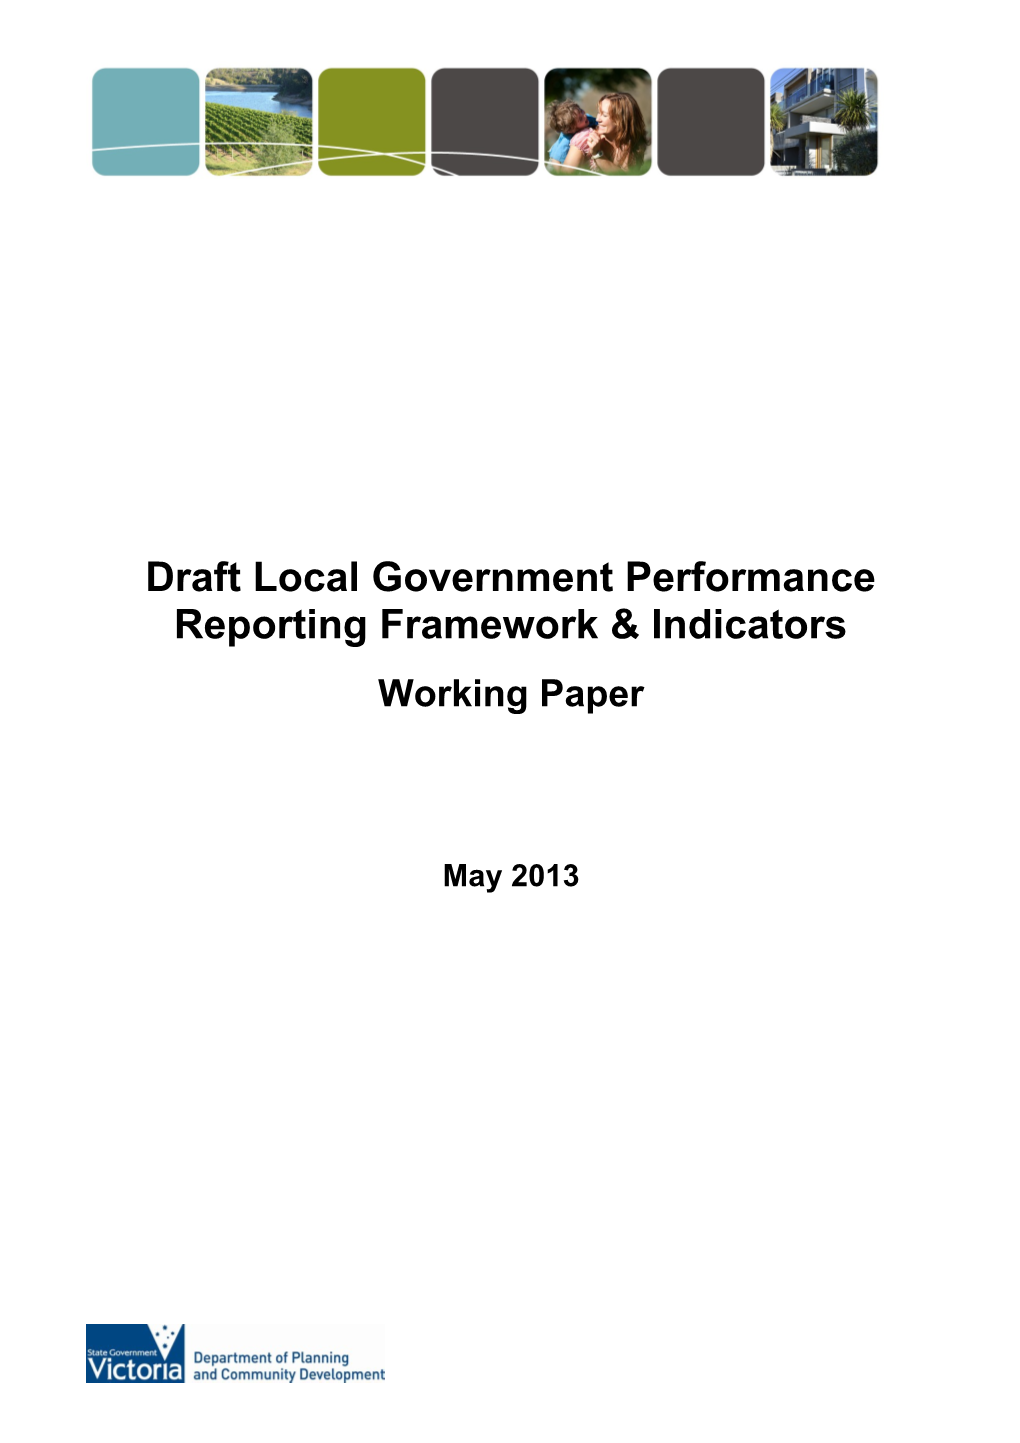 Draft Local Government Performance Reporting Framework & Indicators